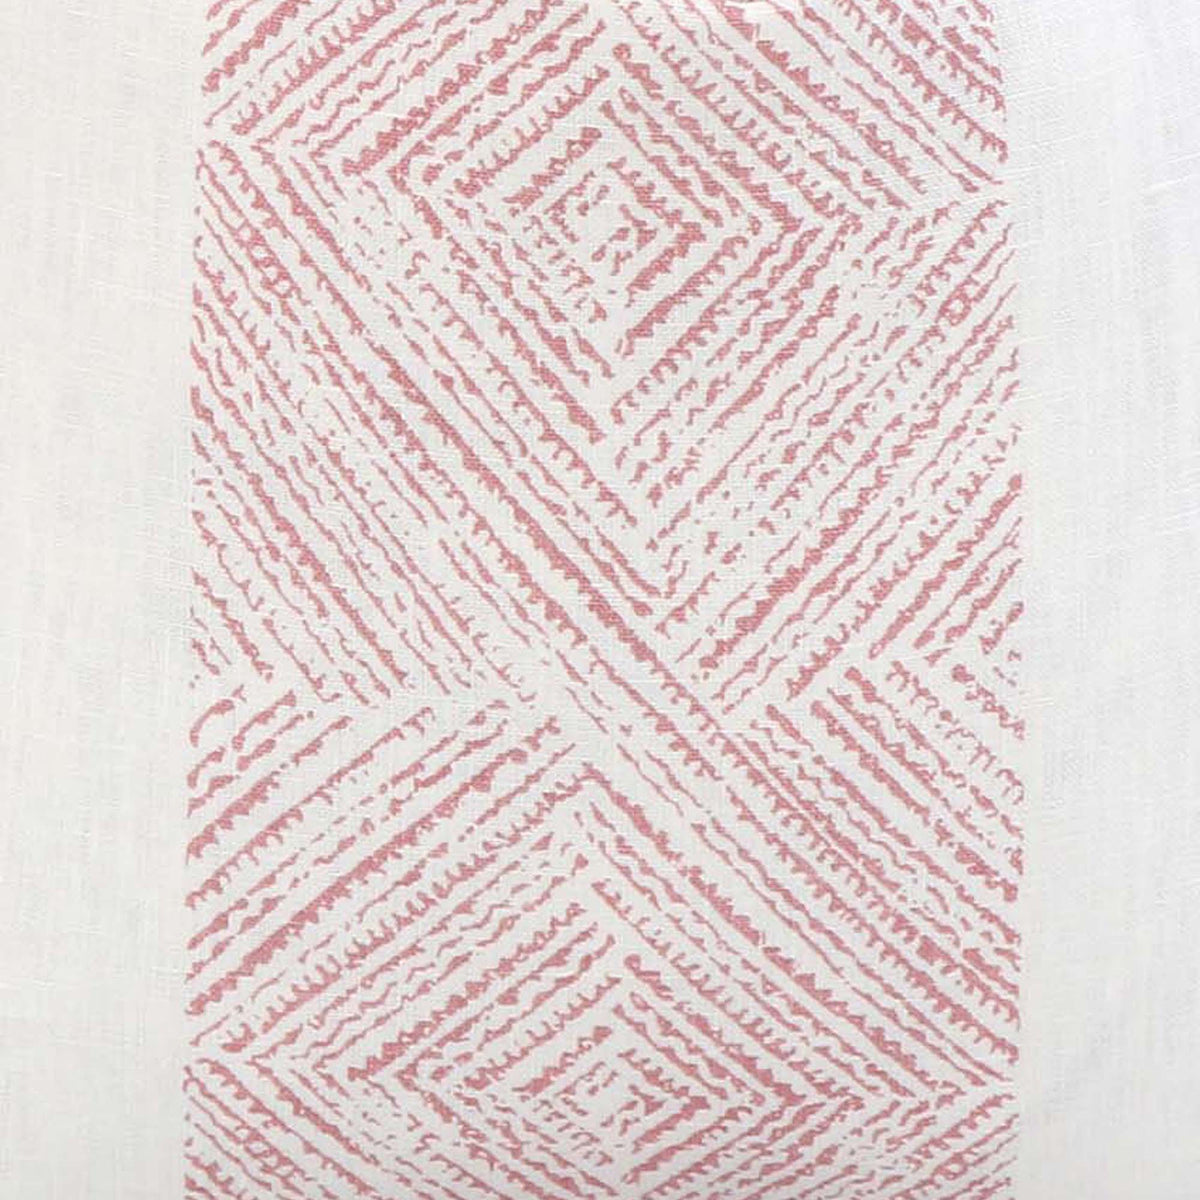 Clipperton Stripe Blush / 4x4 inch Fabric Swatch